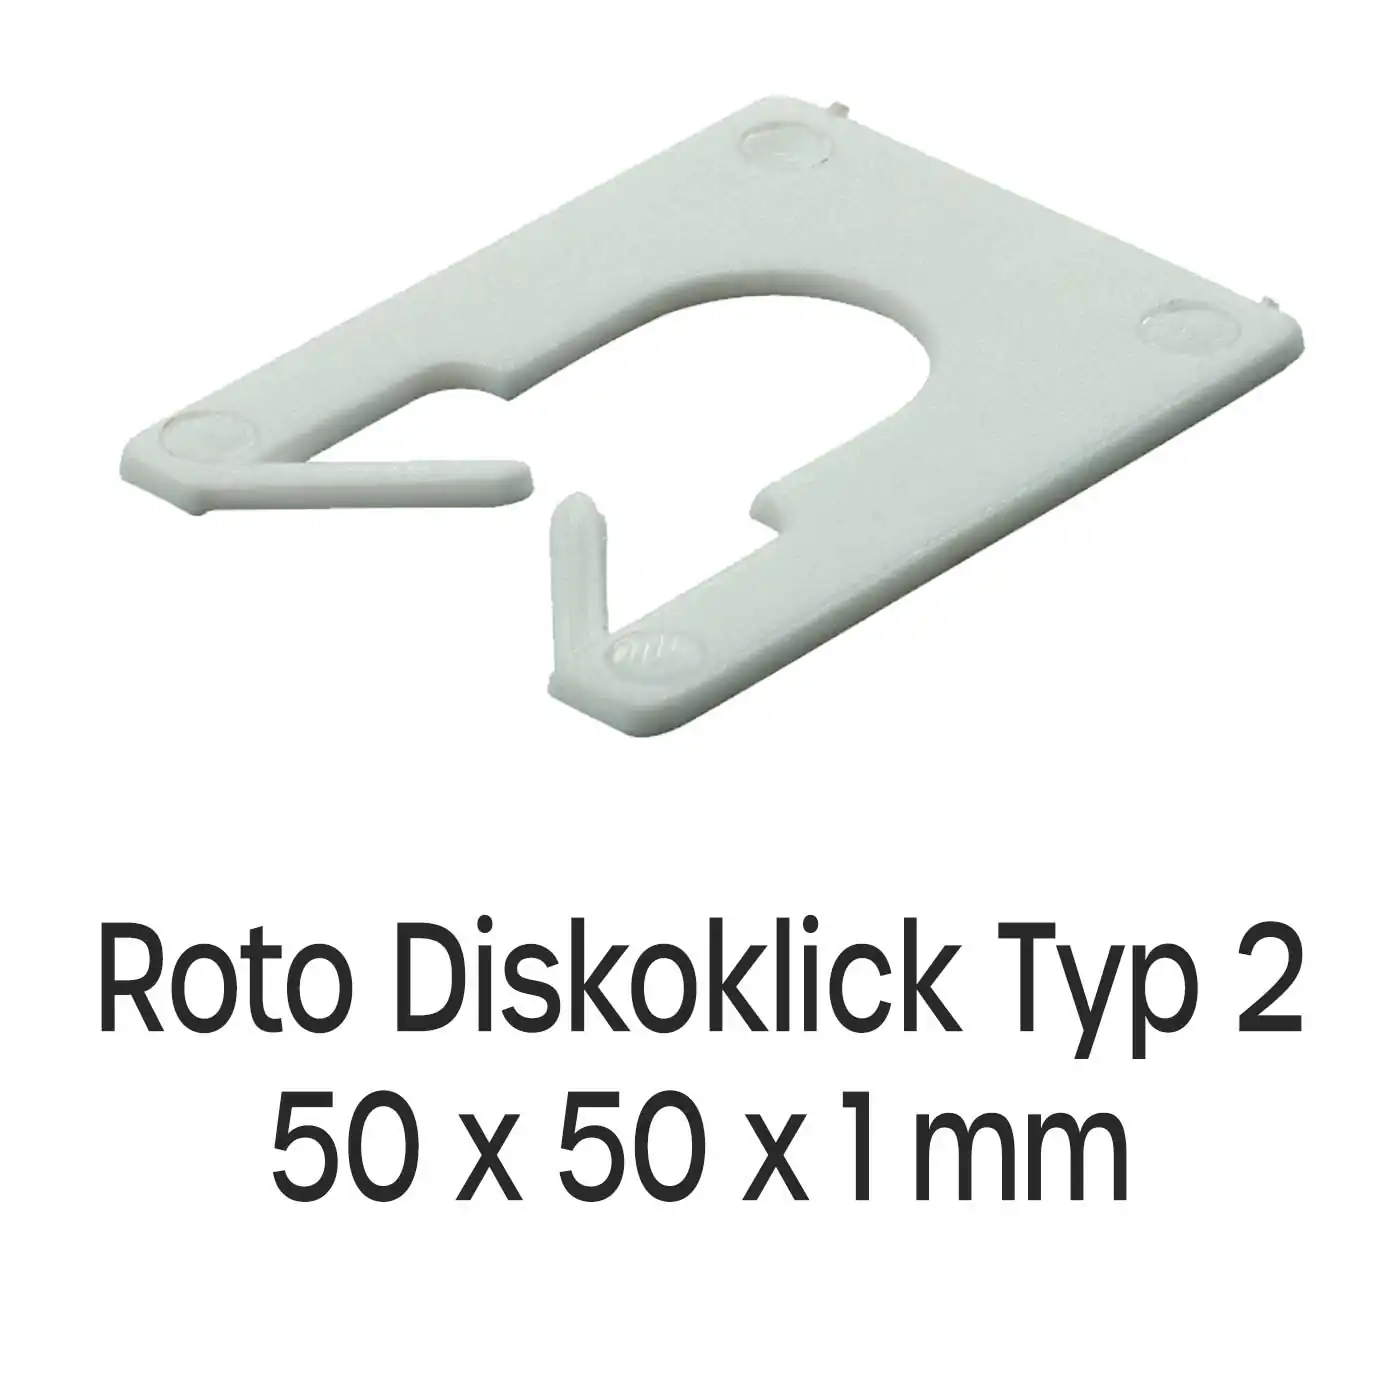 Distanzplatten Roto Diskoklick Typ 2 50 x 50 x 1 mm 1000 Stück